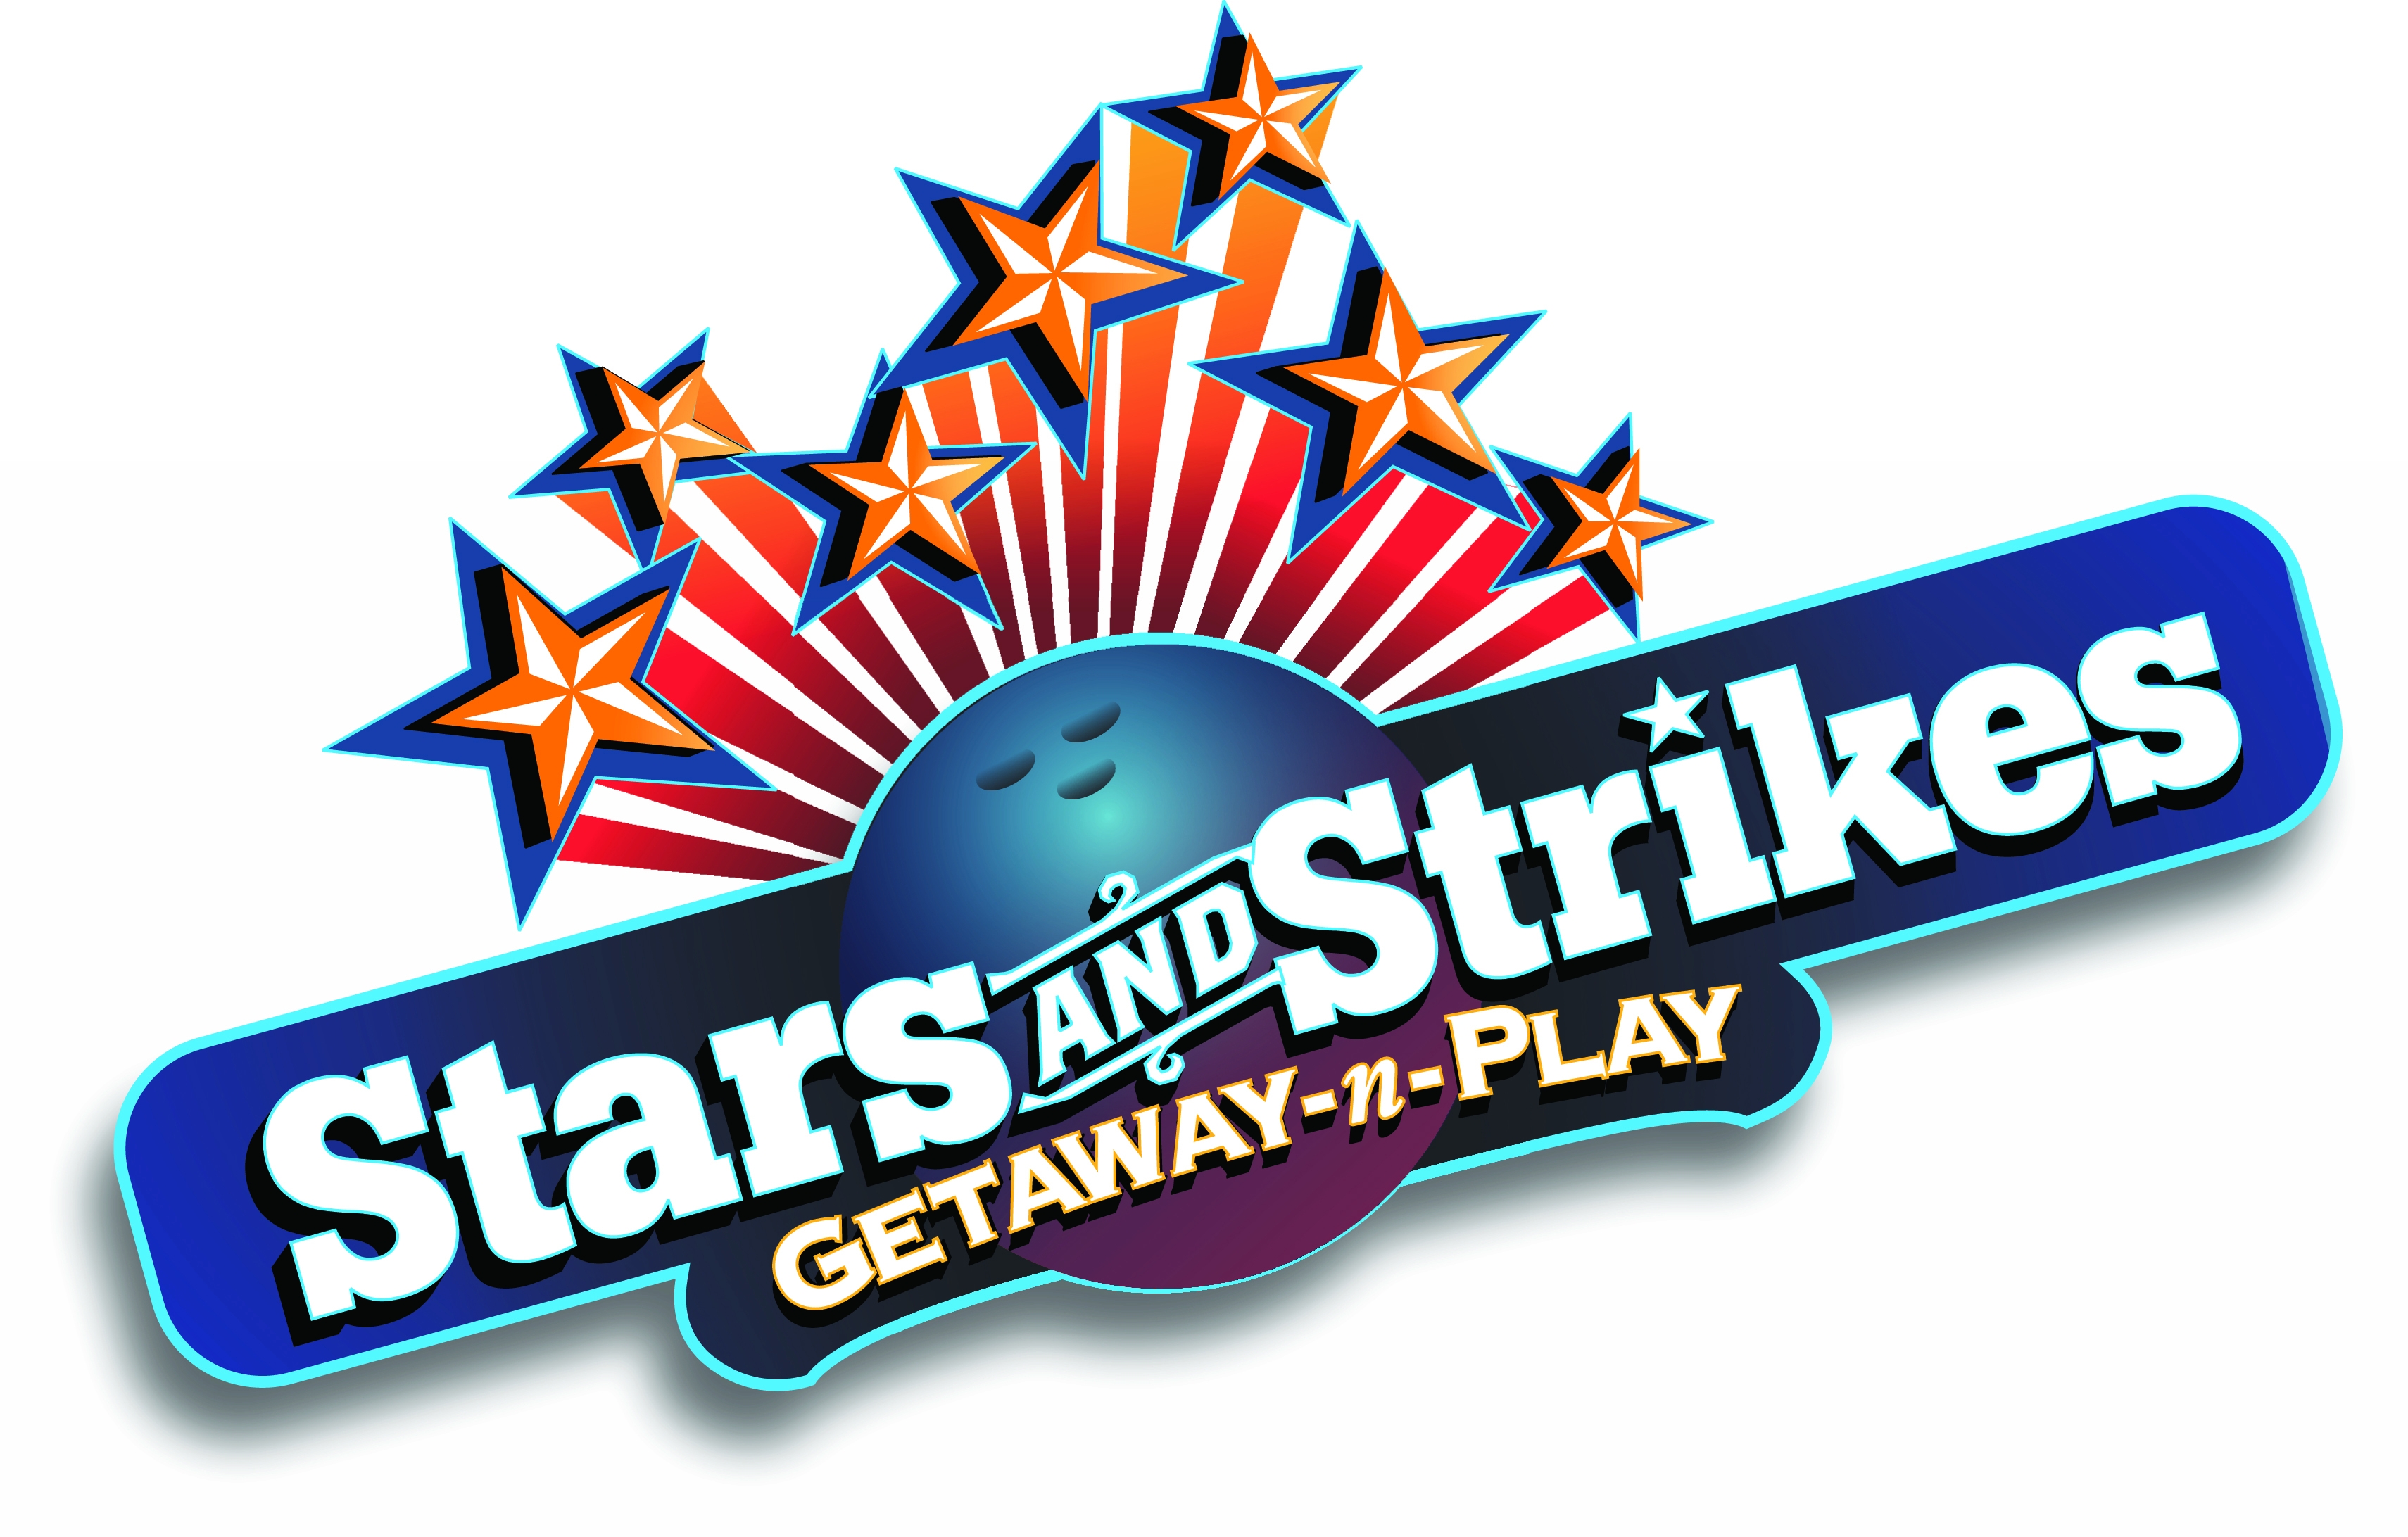 Stars and Strikes Family Entertainment Center Logo